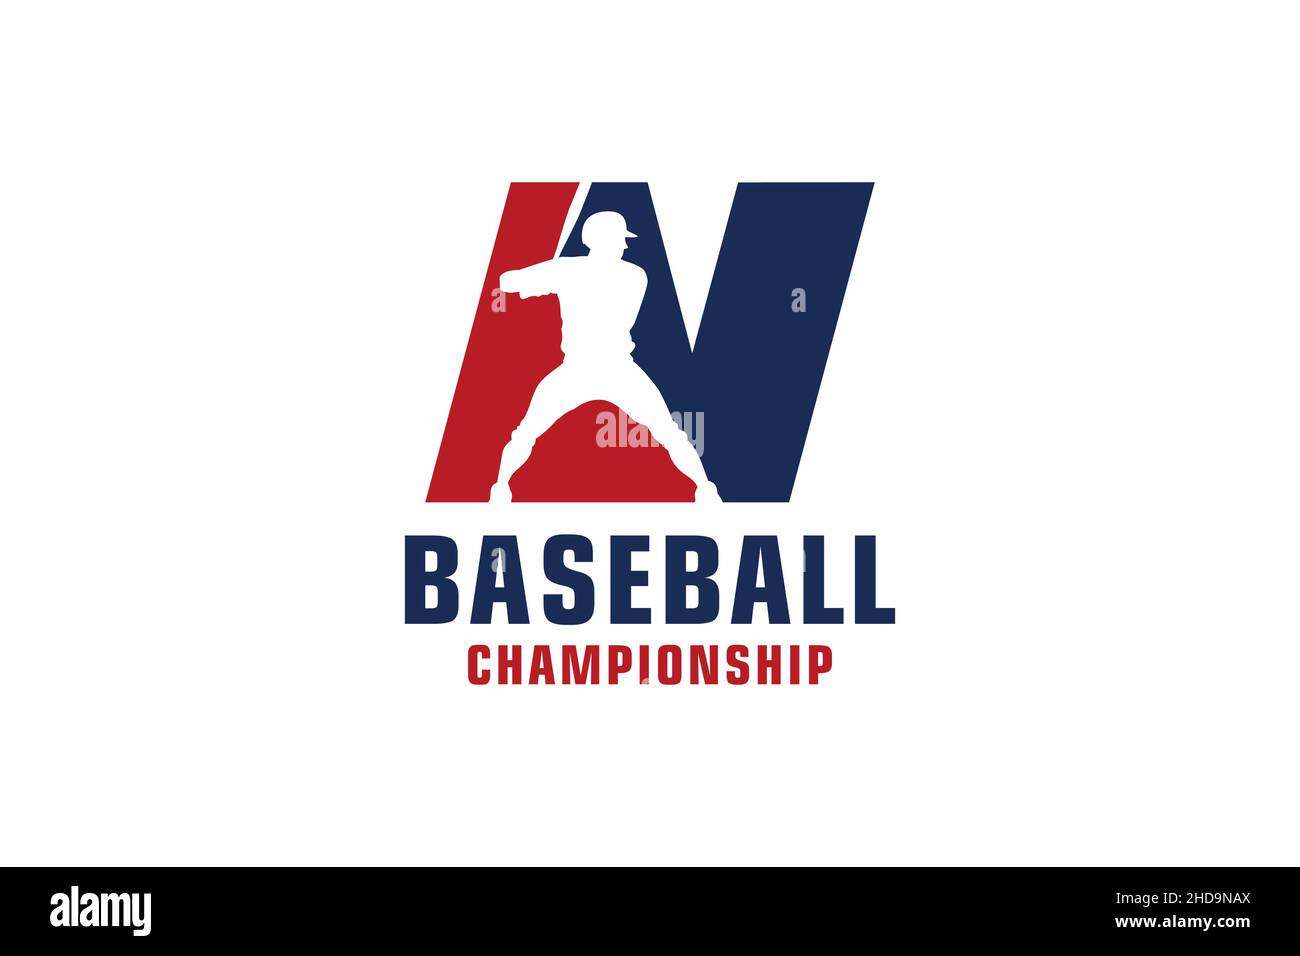 Retro Grungy Poster Design Layout for Baseball Game Stock Vector -  Illustration of headline, element: 261685262